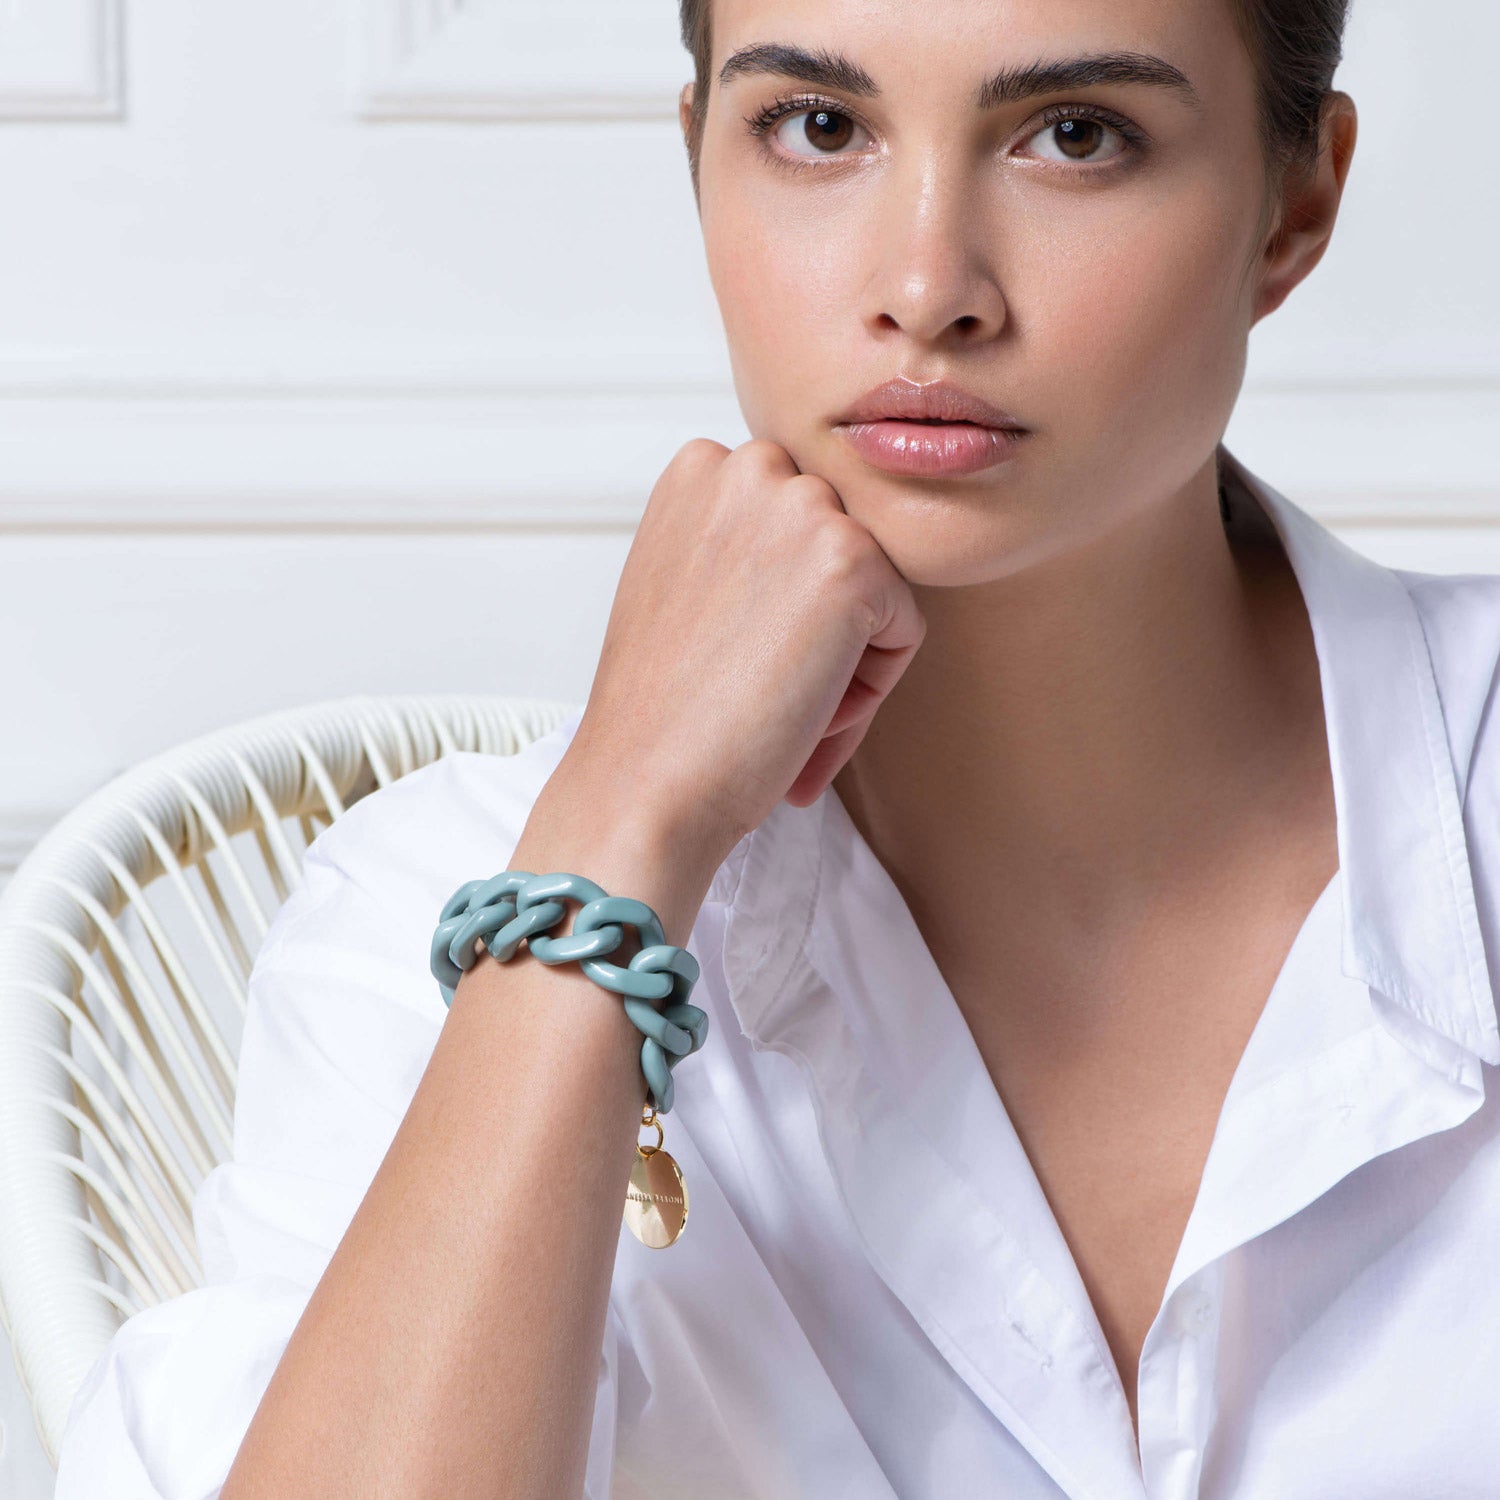 Flat Chain Link Bracelet Taupe Opaline I Acryl Jewellery I Onlineshop -  Vanessa Baroni